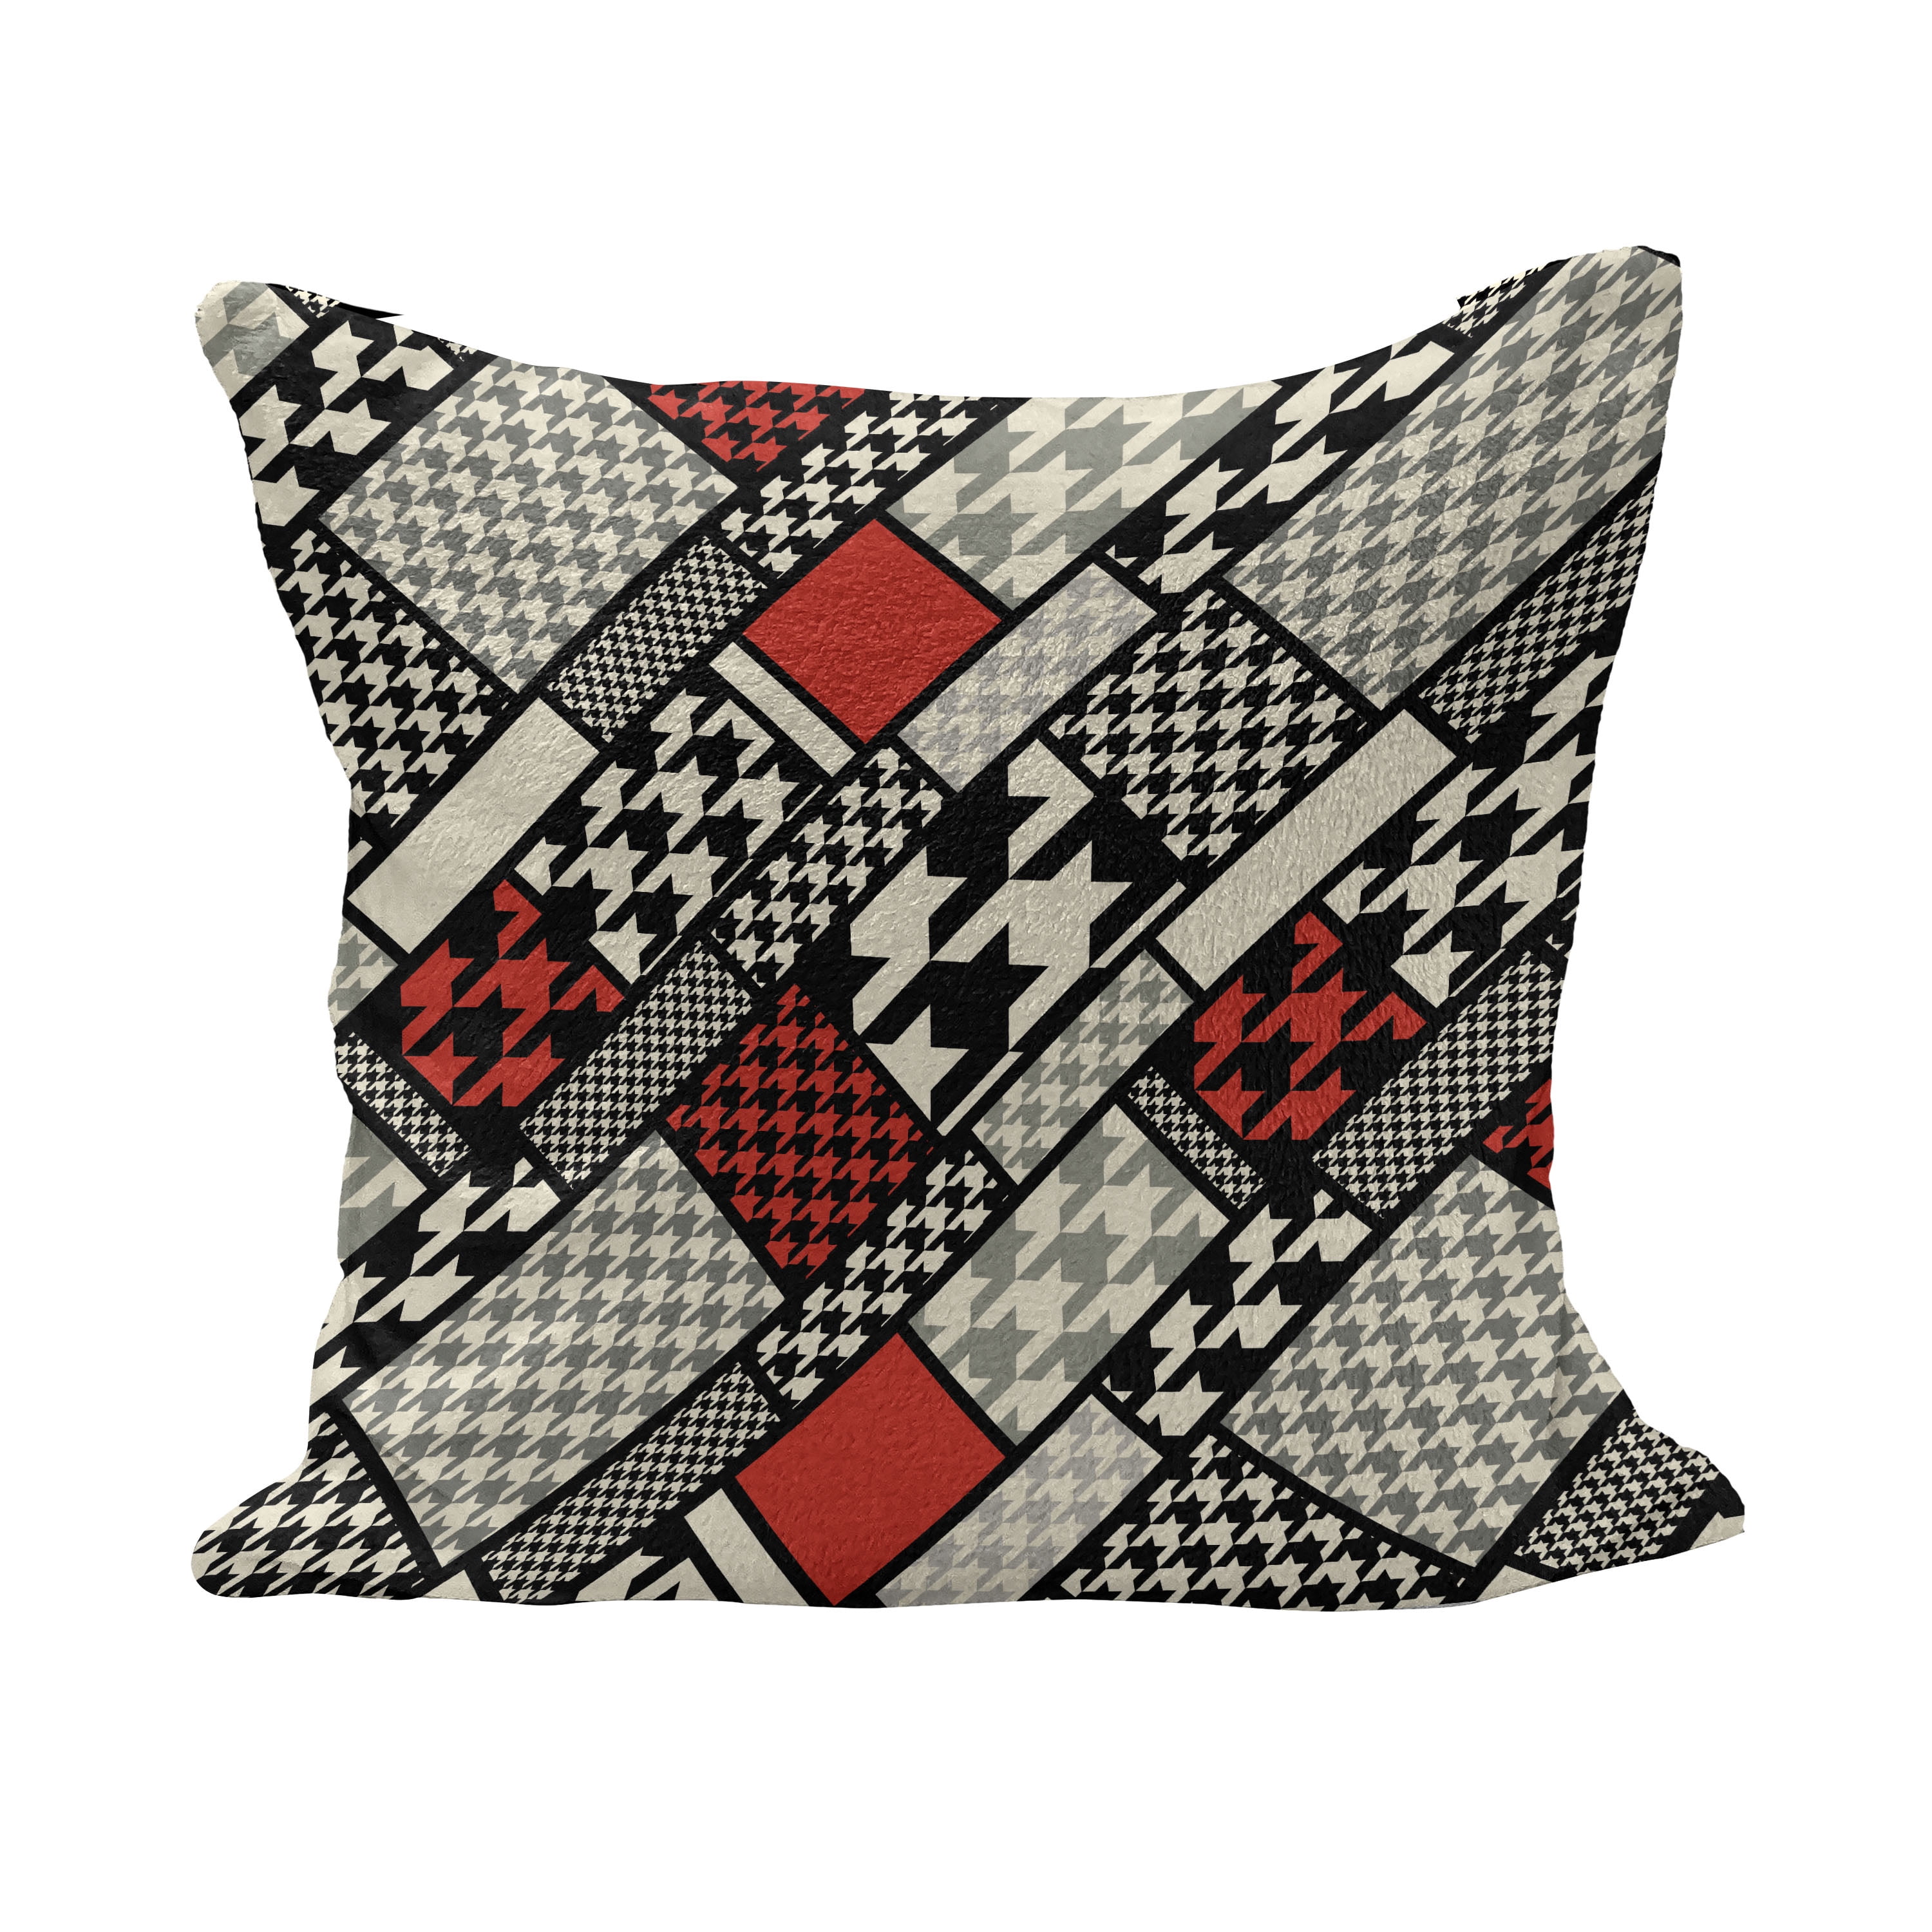 Printed Navajo Kilim Style Cushion Burgundy Red & Natural Abstract Geometric.